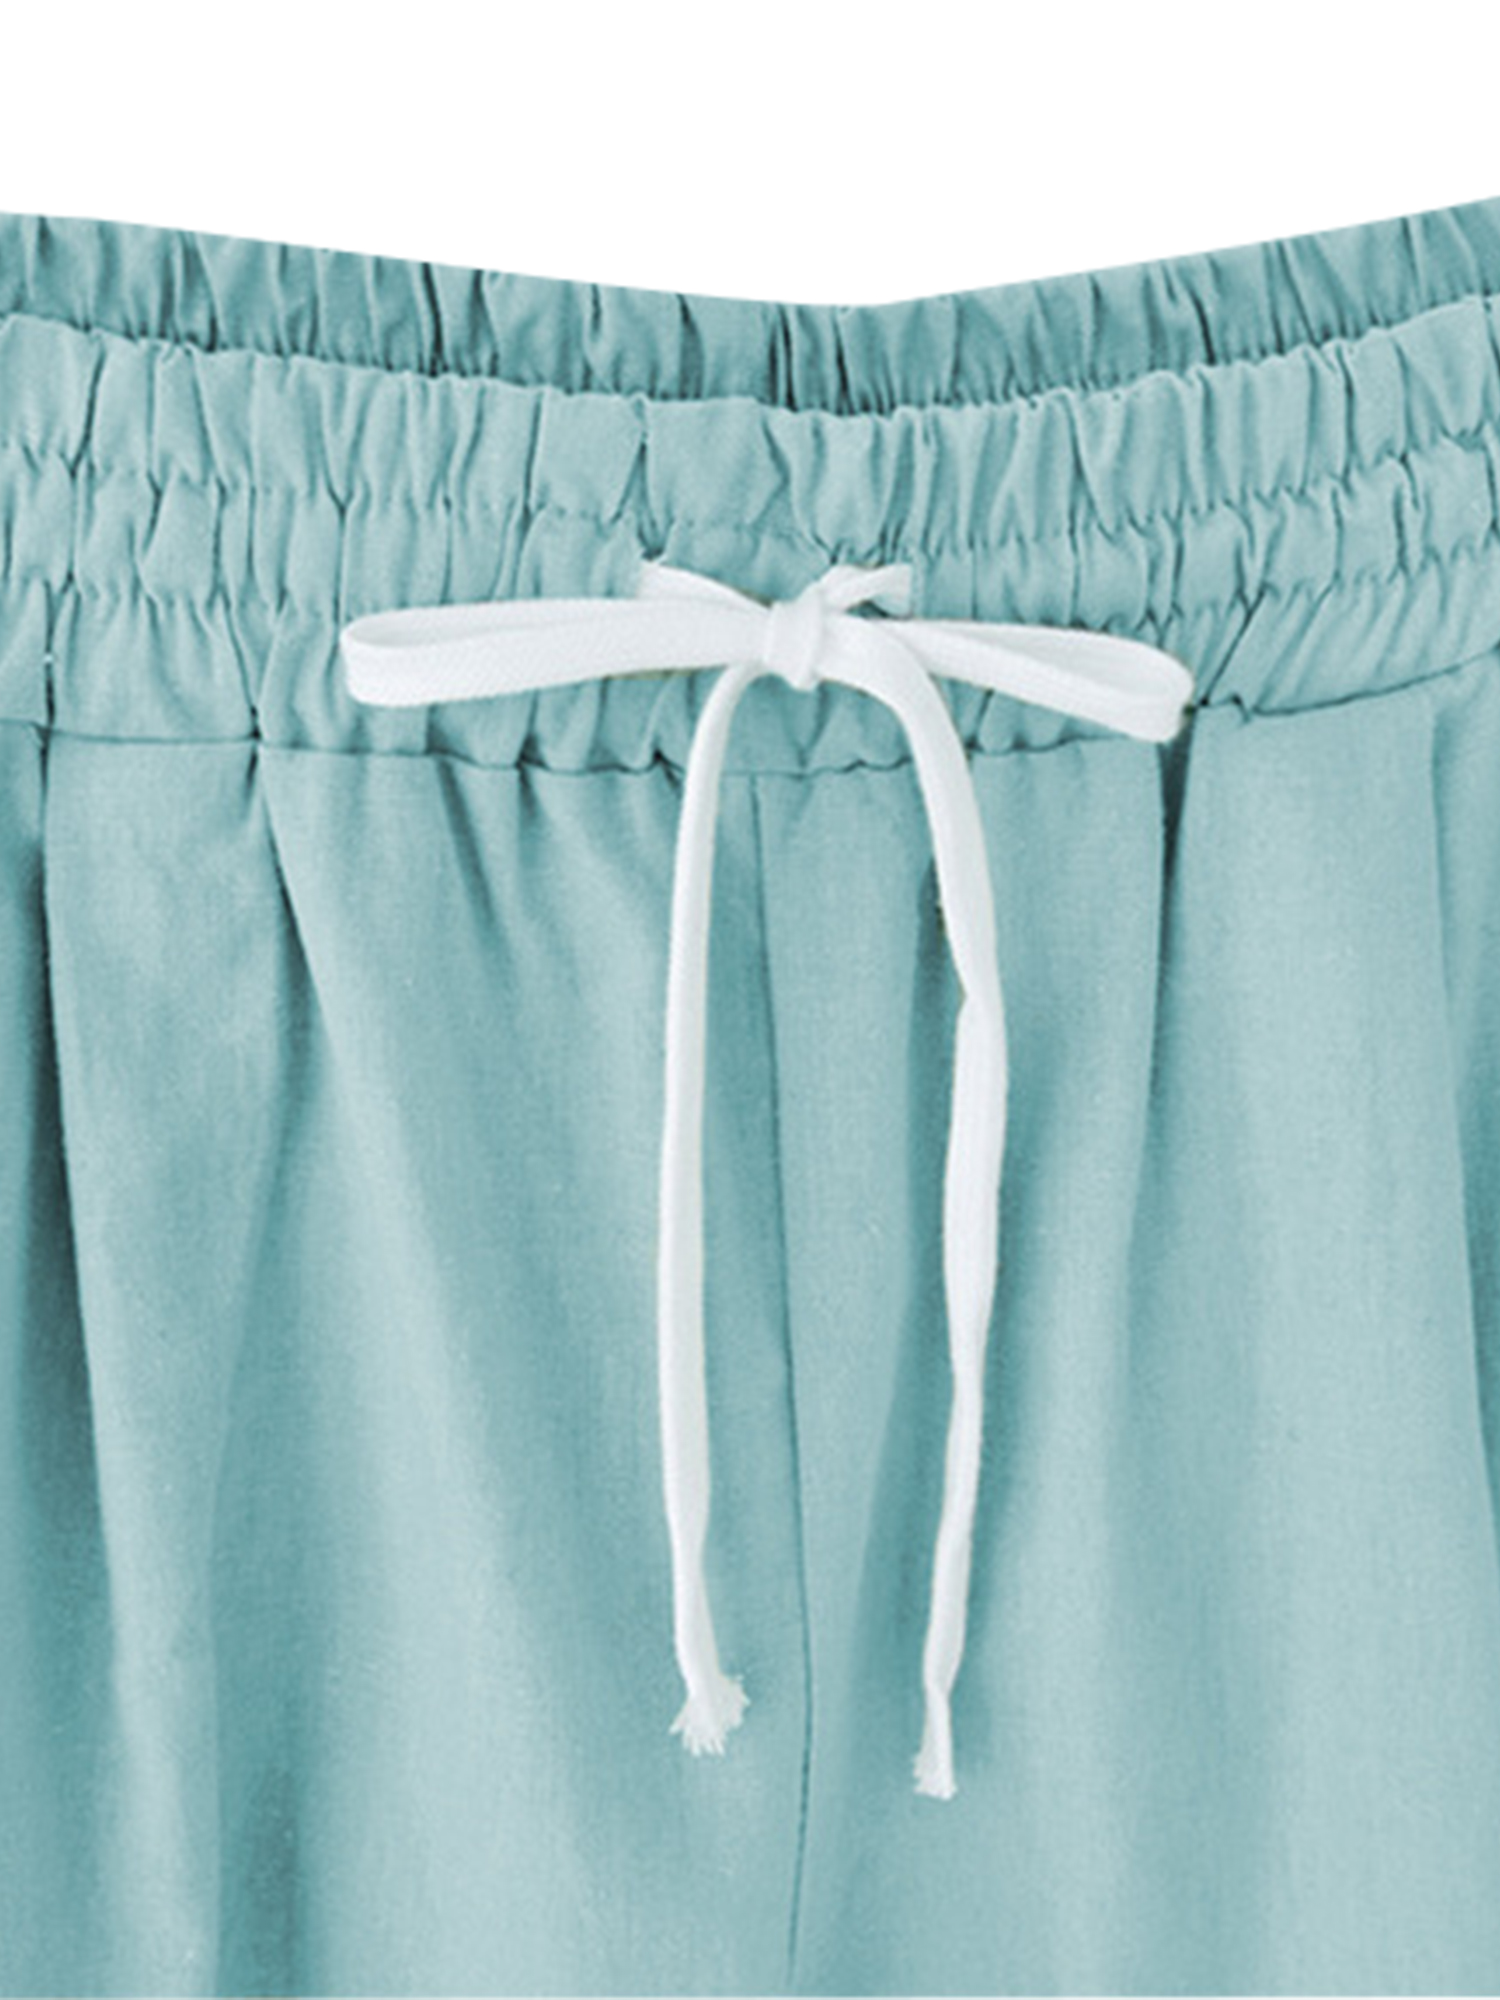 Niuer Women Summer Shorts Casual Lounge Wear Short Hot Pants Ladies Bermuda Shorts Ladies High Waist Beach Knee Length Pockets Short Trousers - image 4 of 6